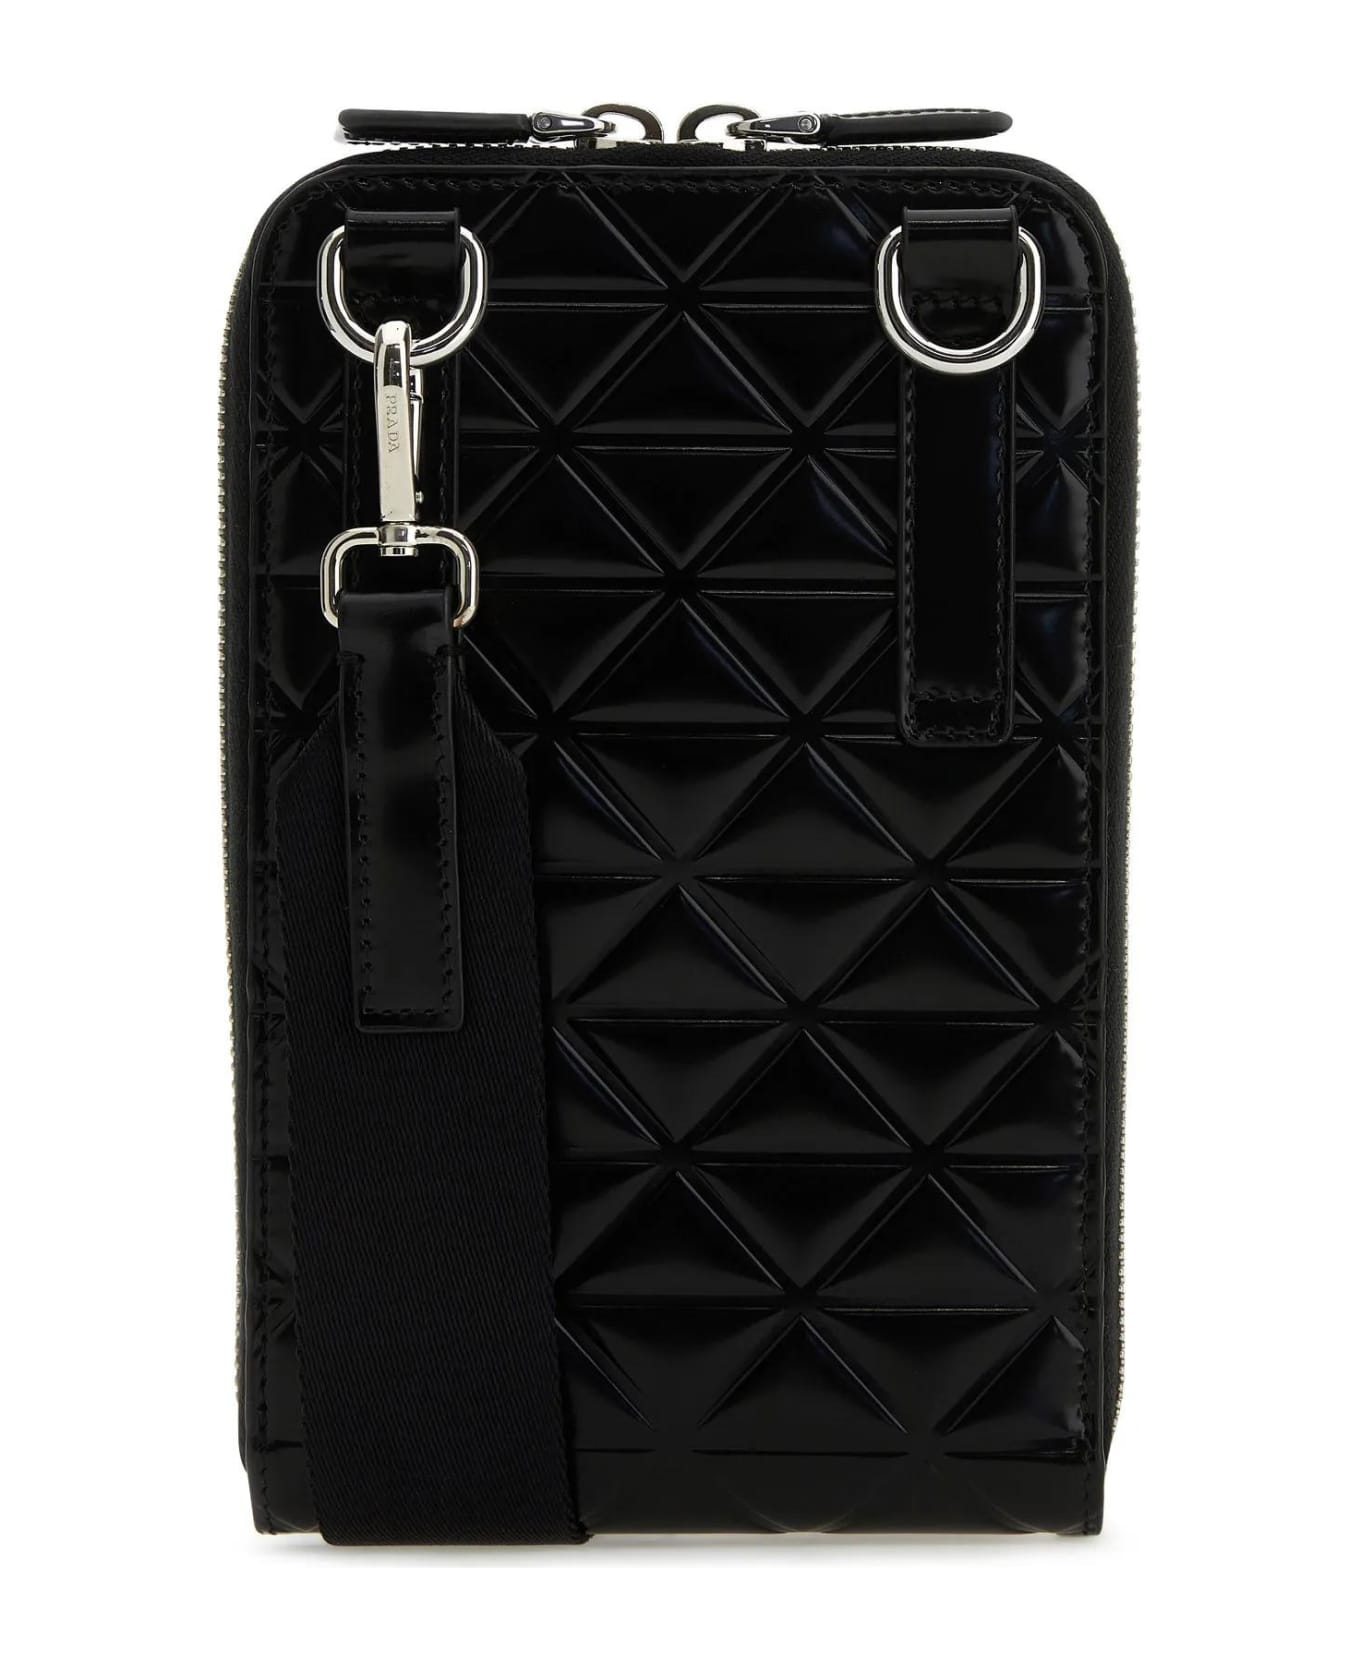 Prada Black Leather Phone Case